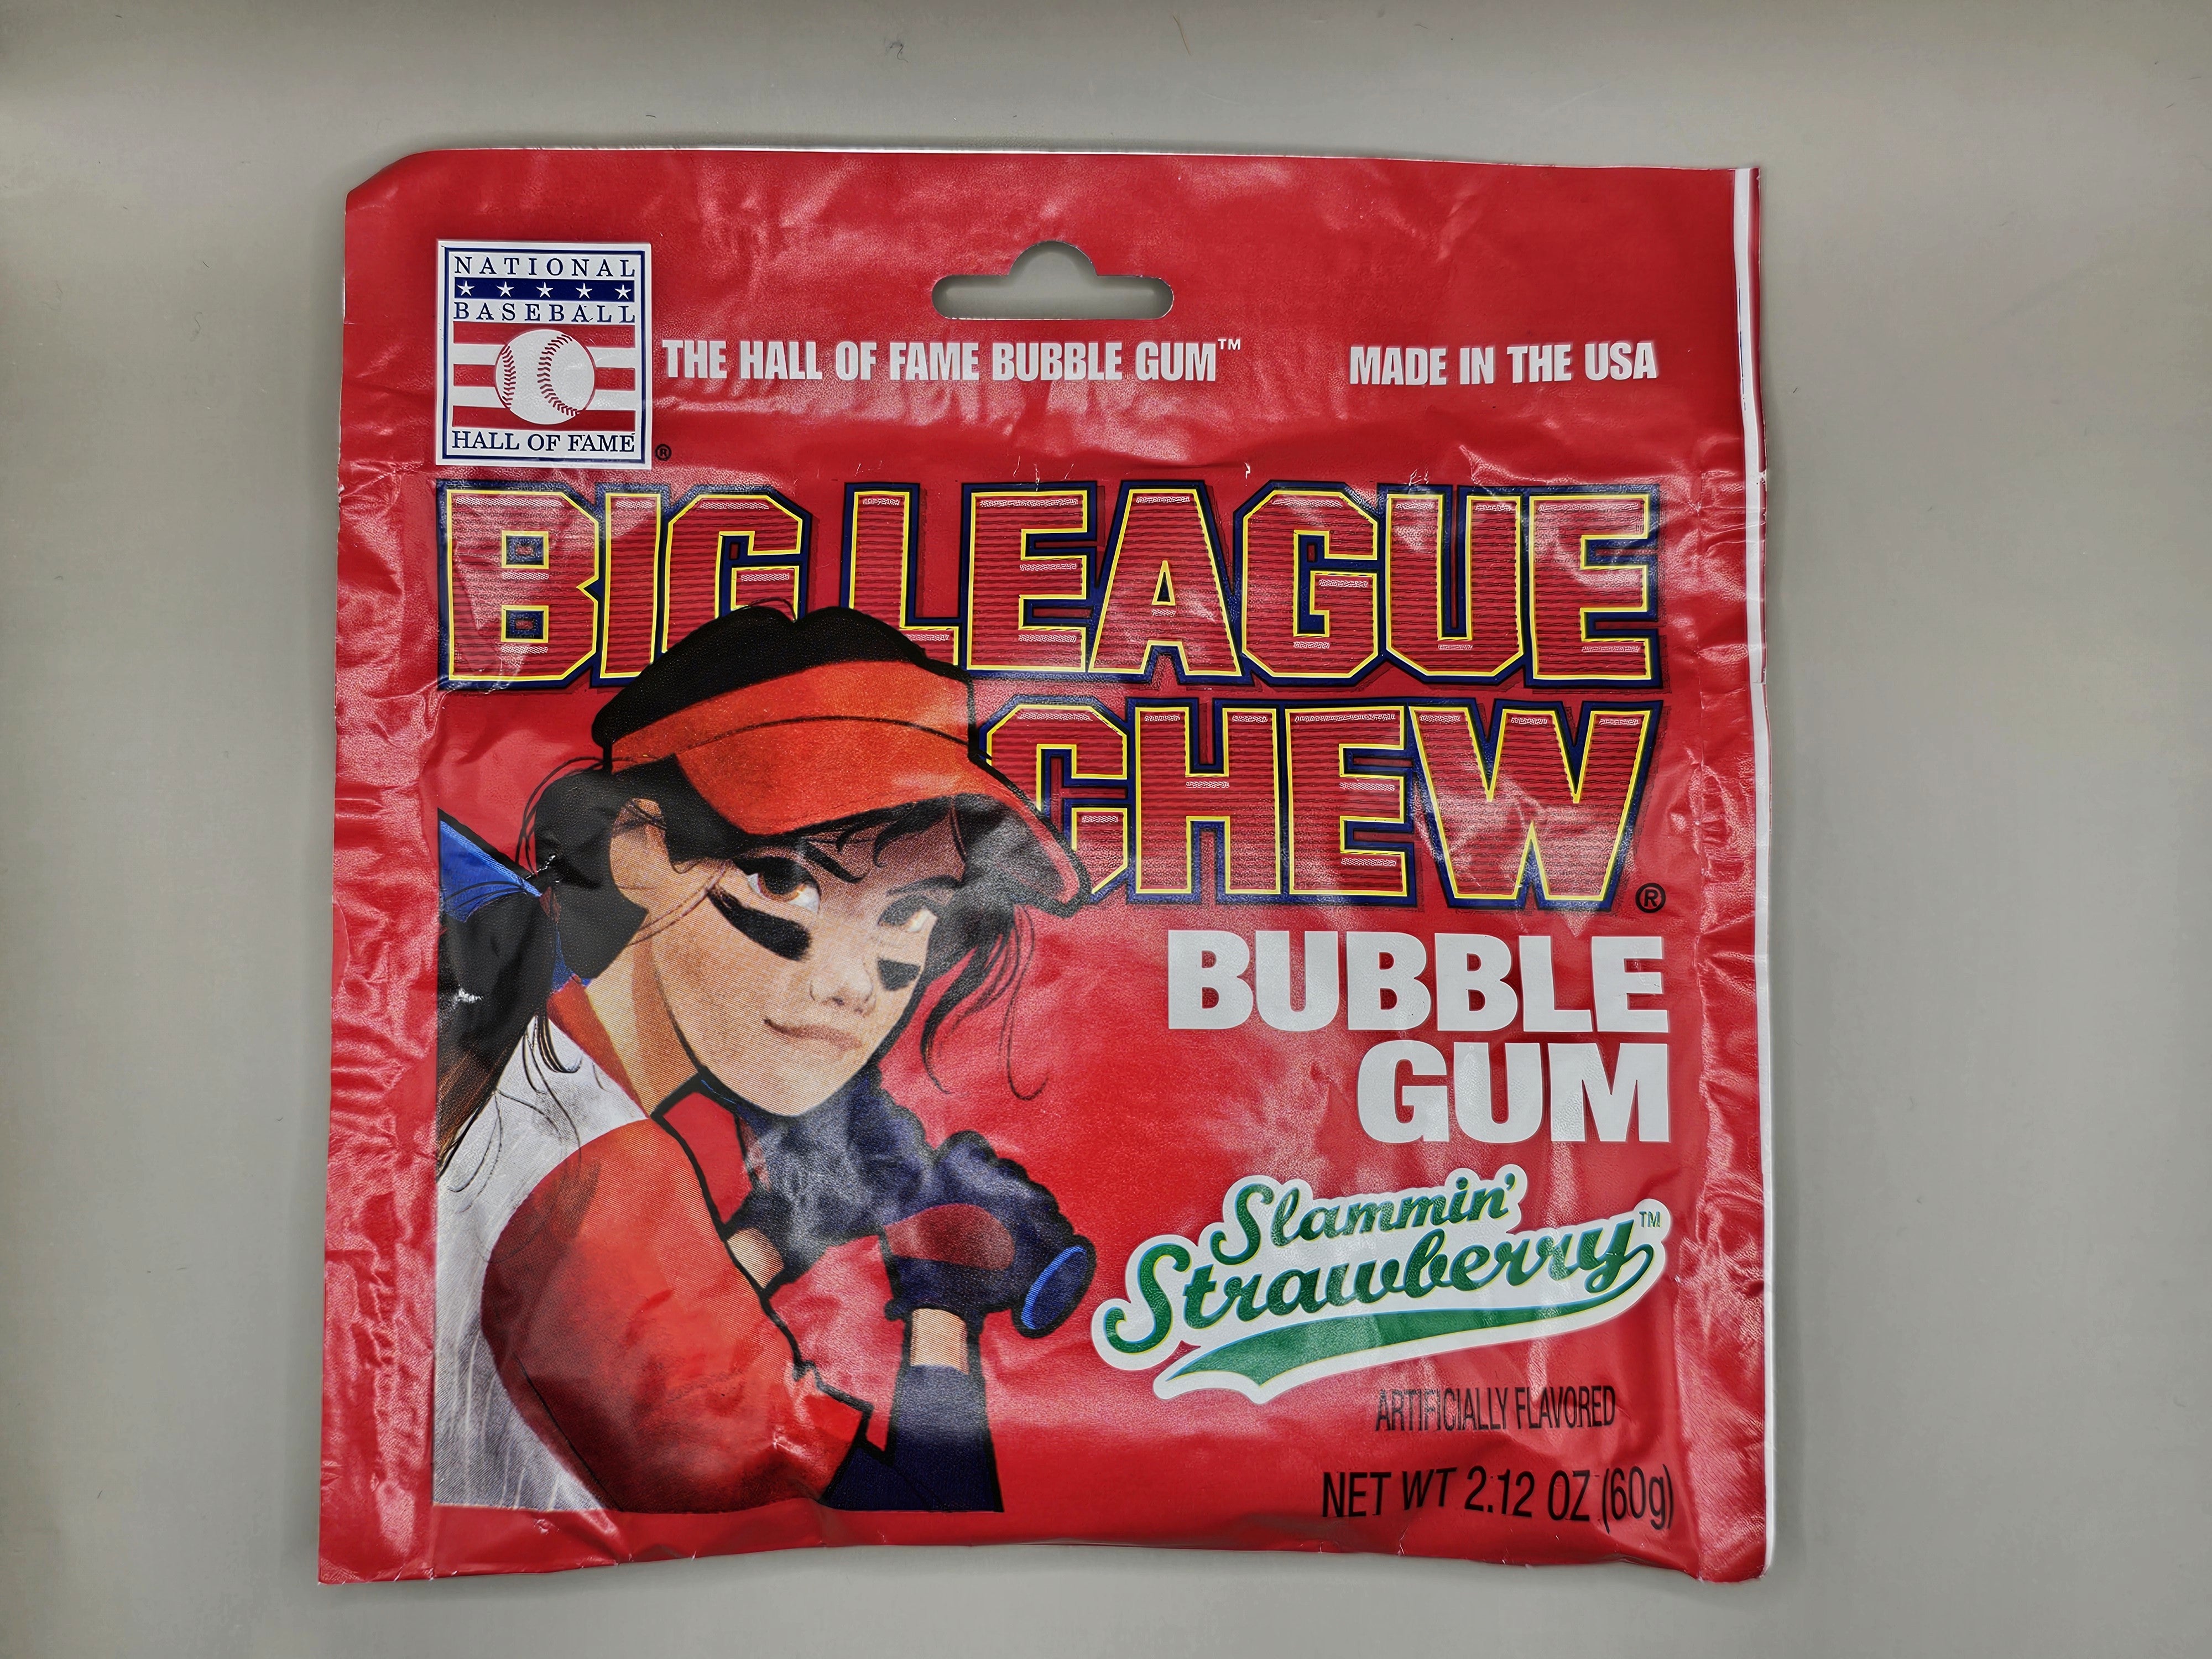 Strawberry big league chew.